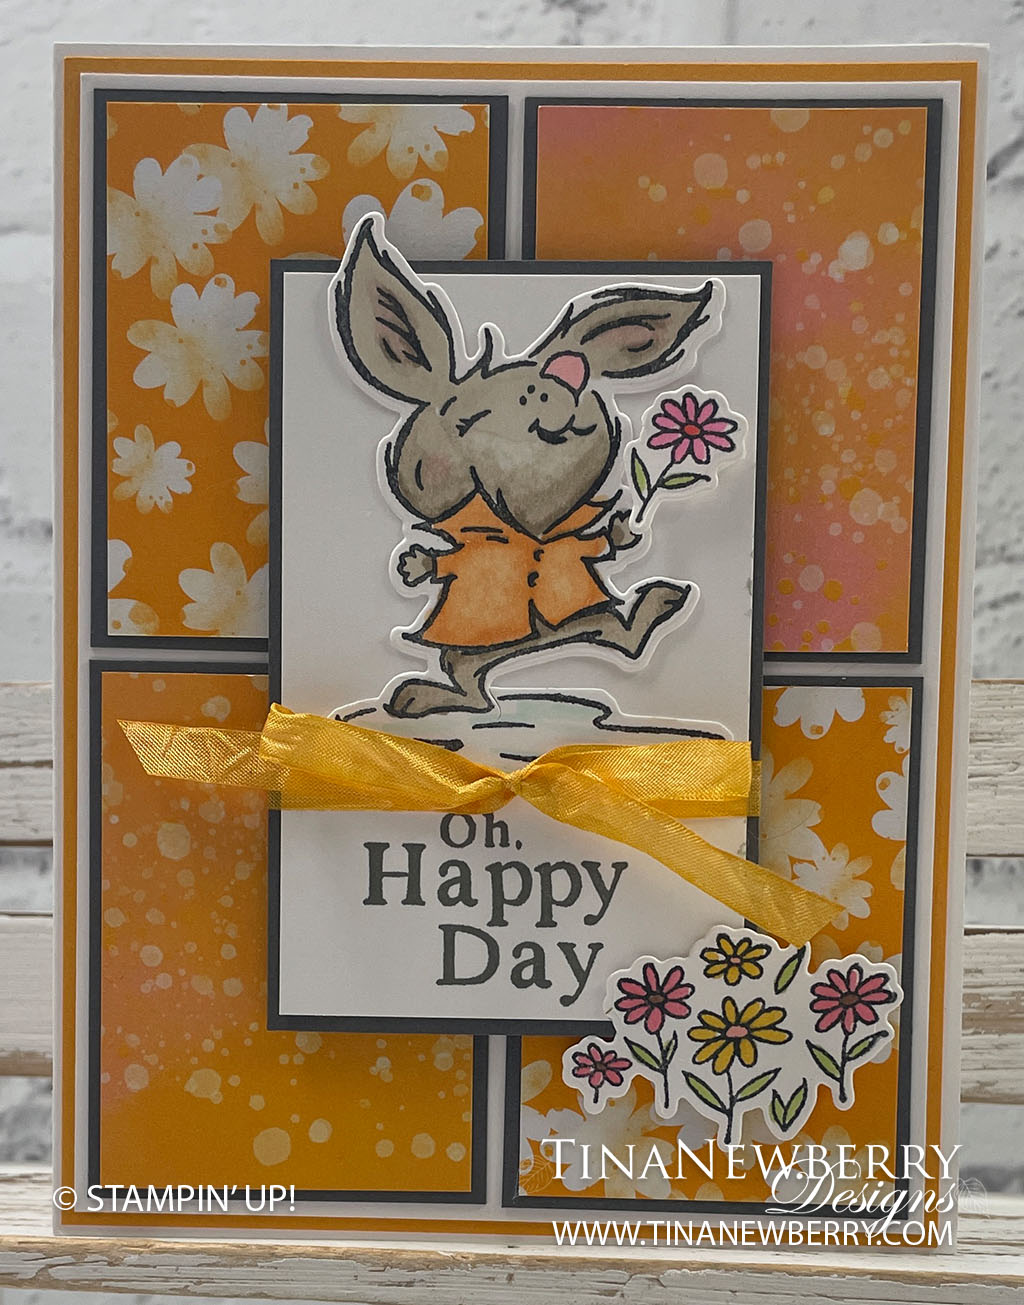 Oh, Happy Rabbit Playing in the Rain Handmade Card